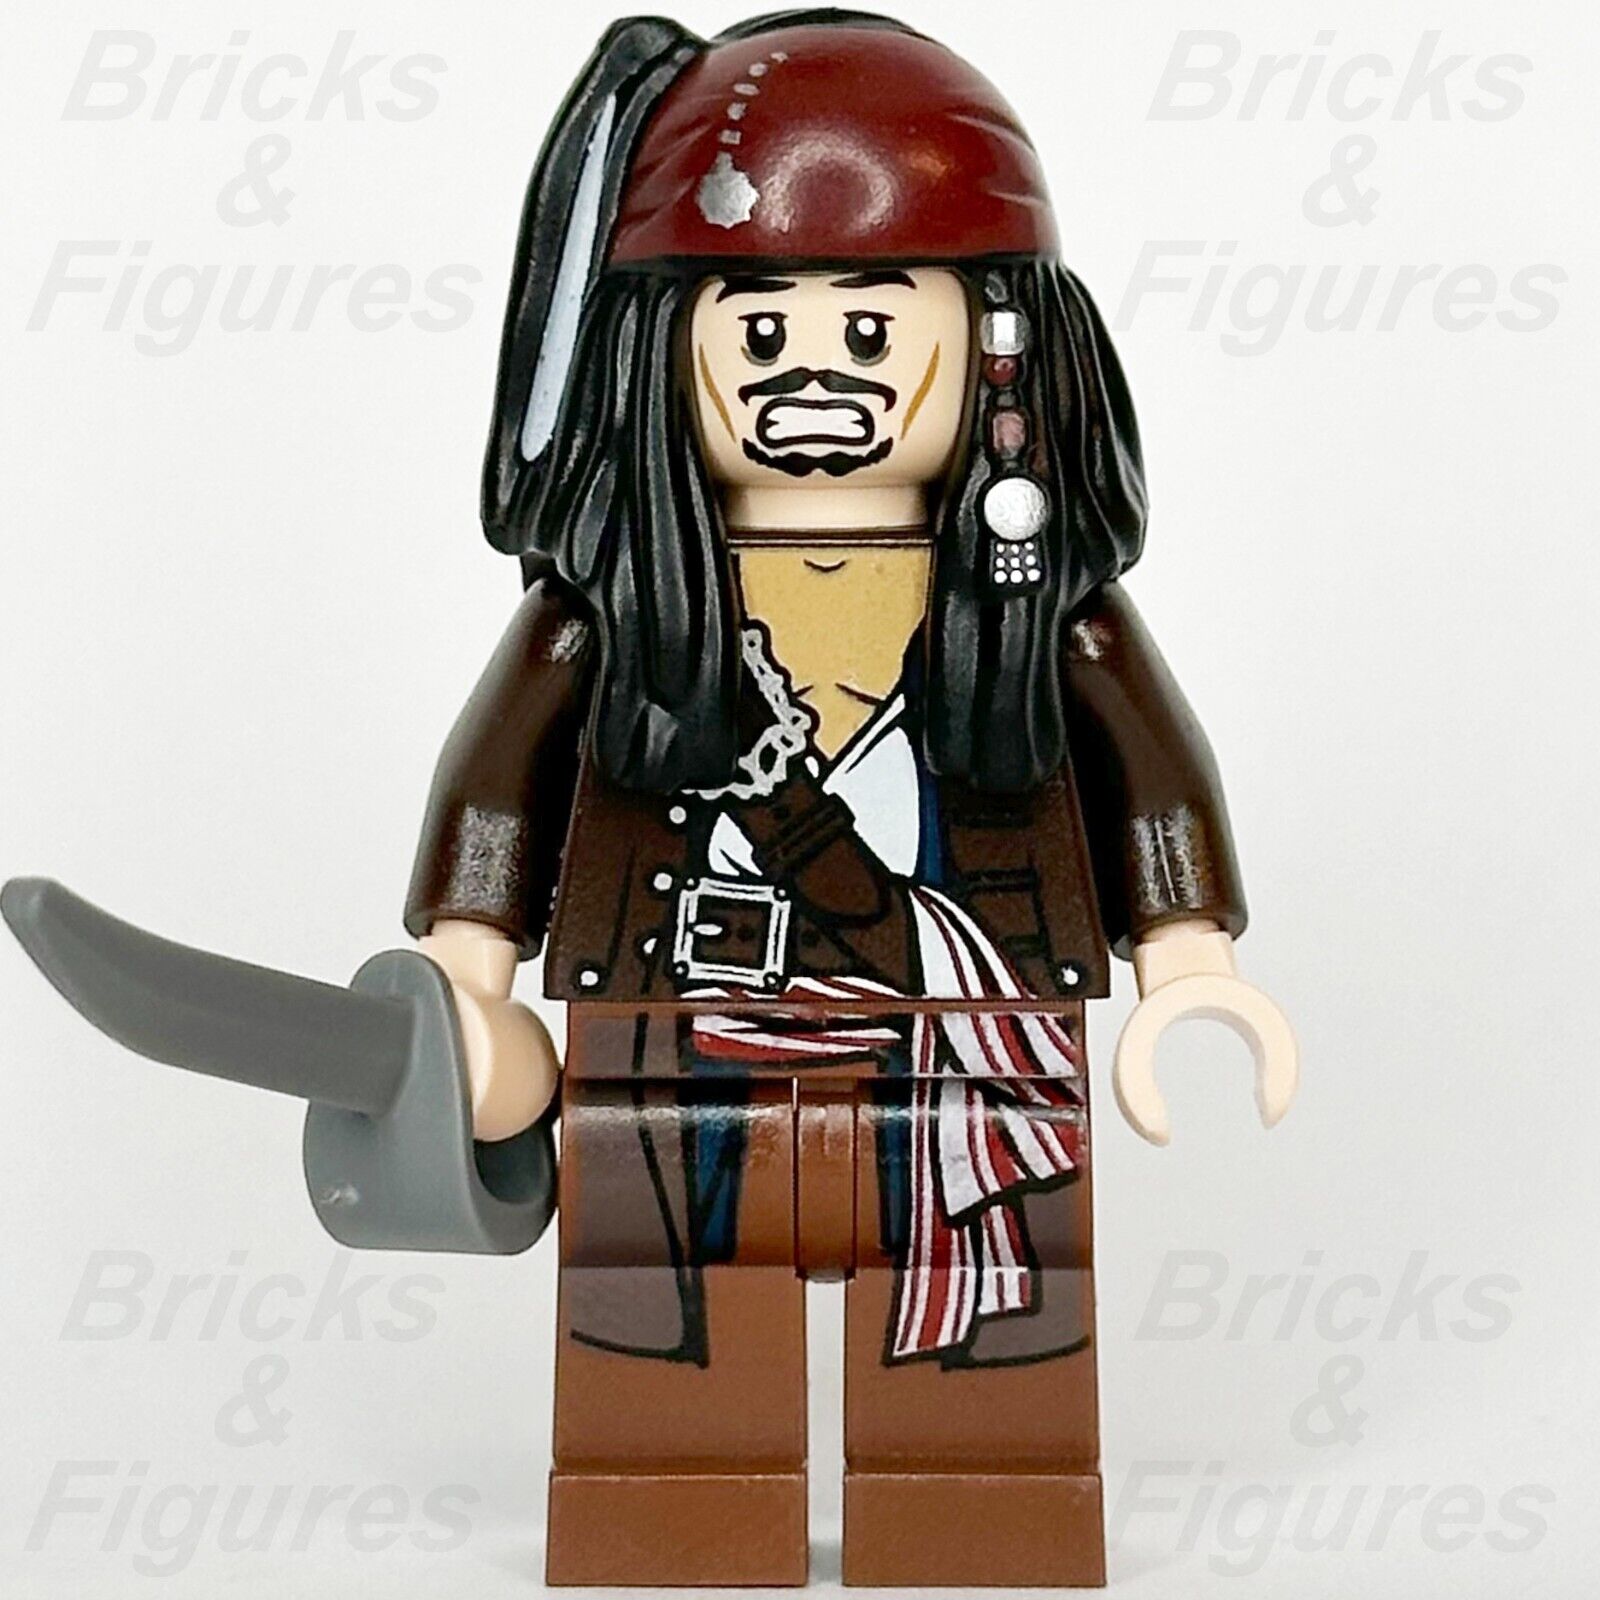 LEGO Pirates of the Caribbean Captain Jack Sparrow Minifigure Pirate 4184 poc034 - Bricks & Figures